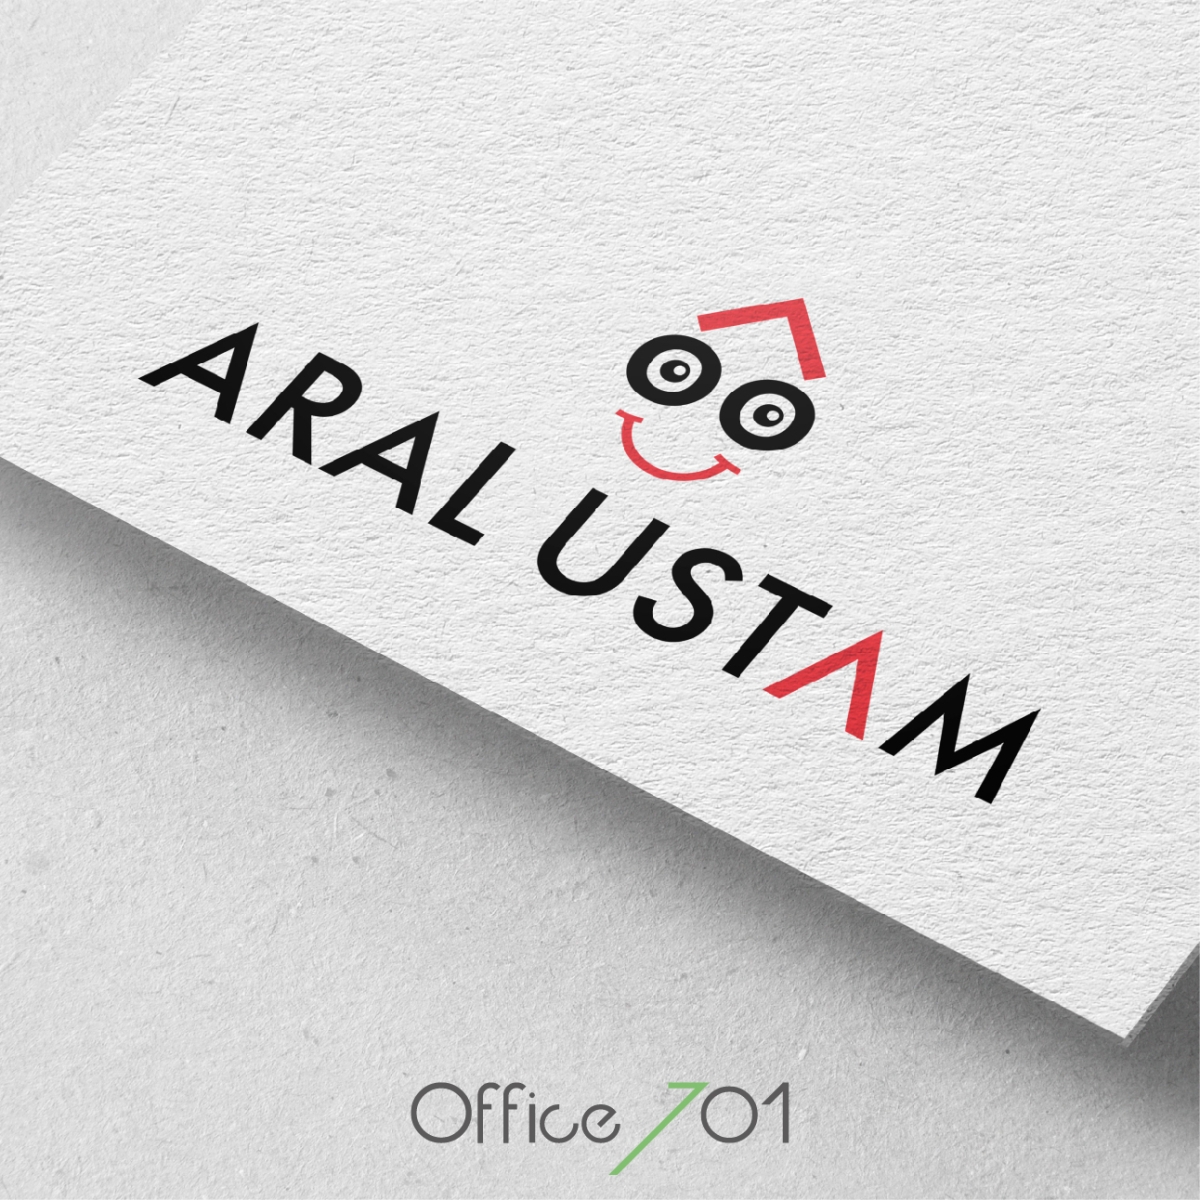 Office701 | Aral Ustam | Logo Design